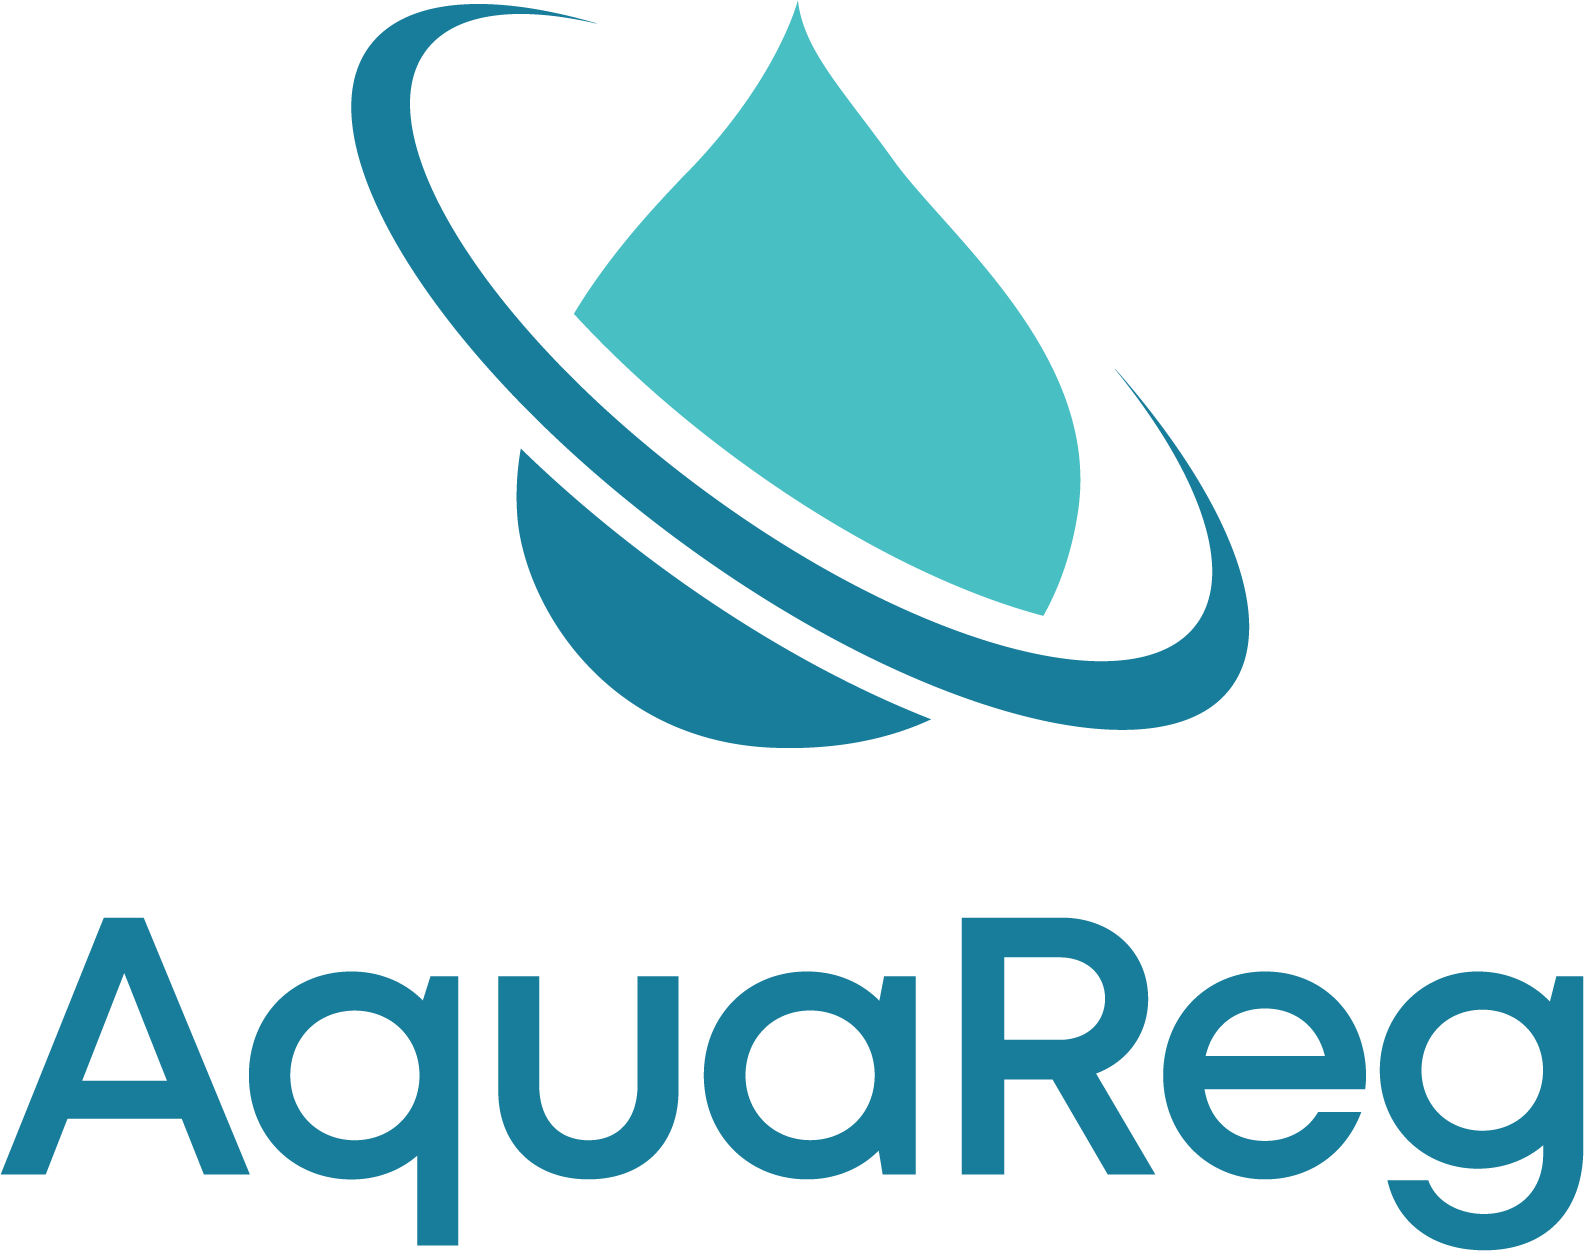 AquaReg